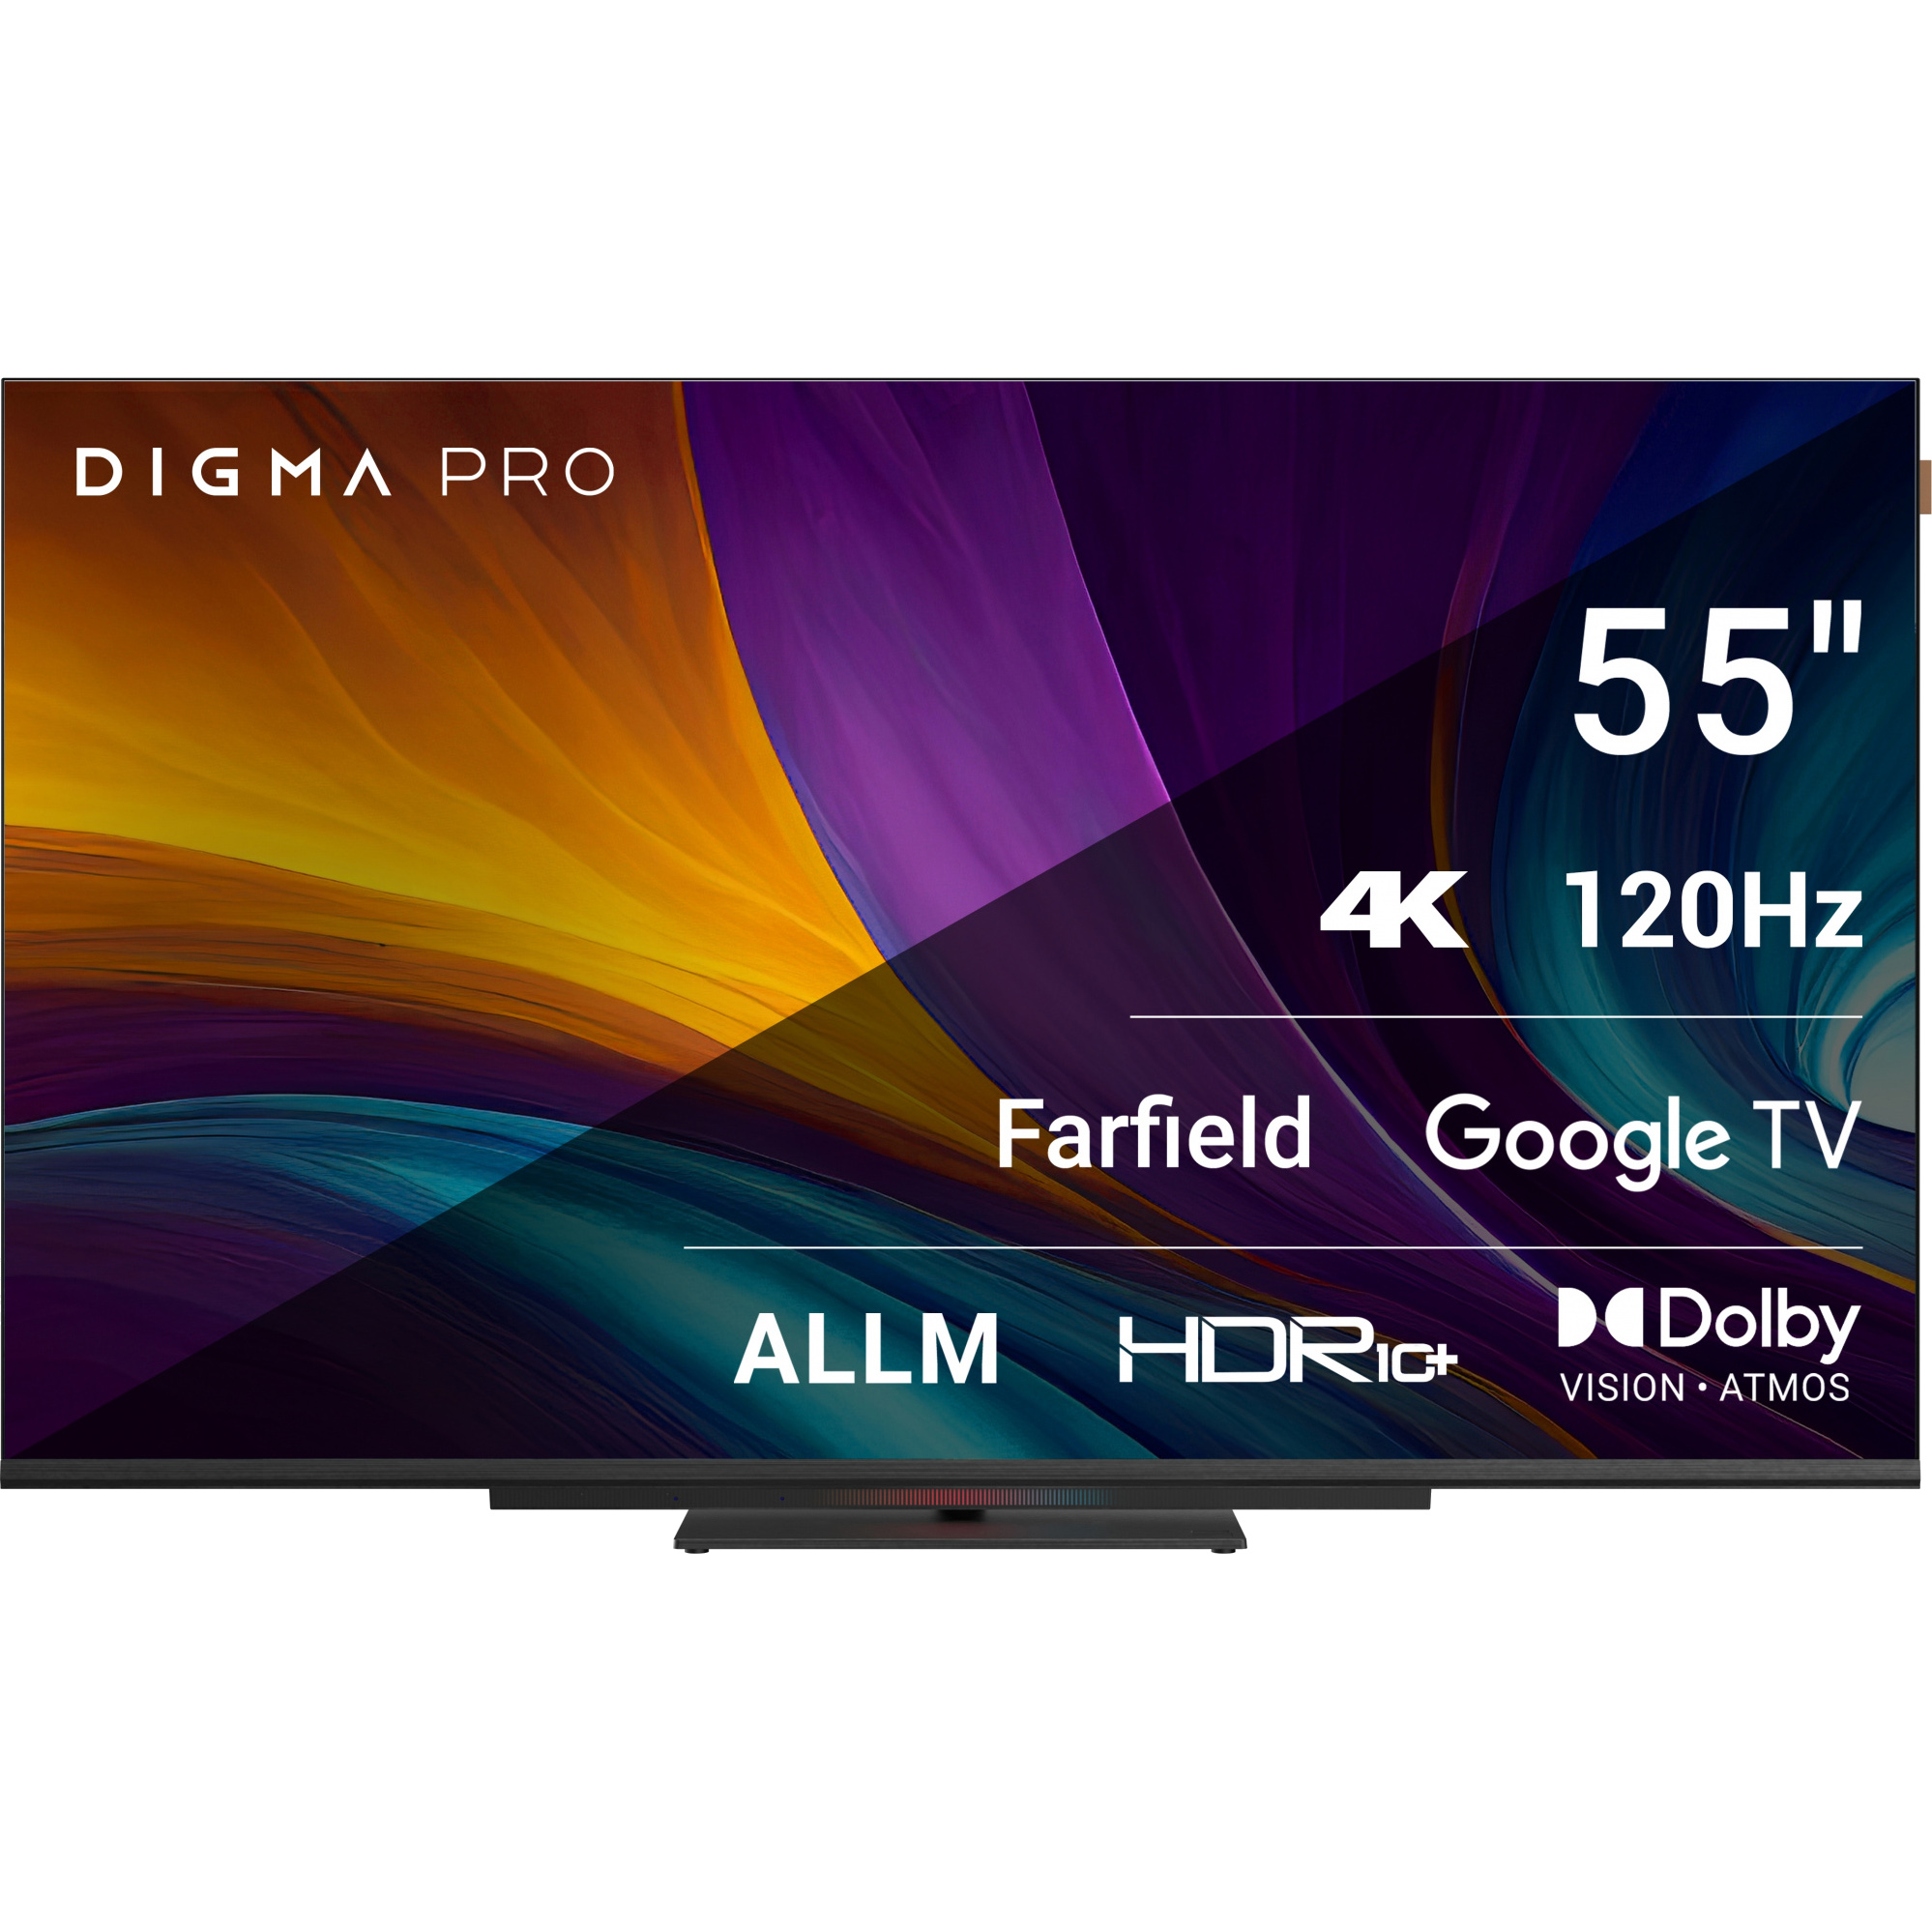 Телевизор Digma Pro 55 55С телевизор led digma pro google tv uhd 43c черный черный